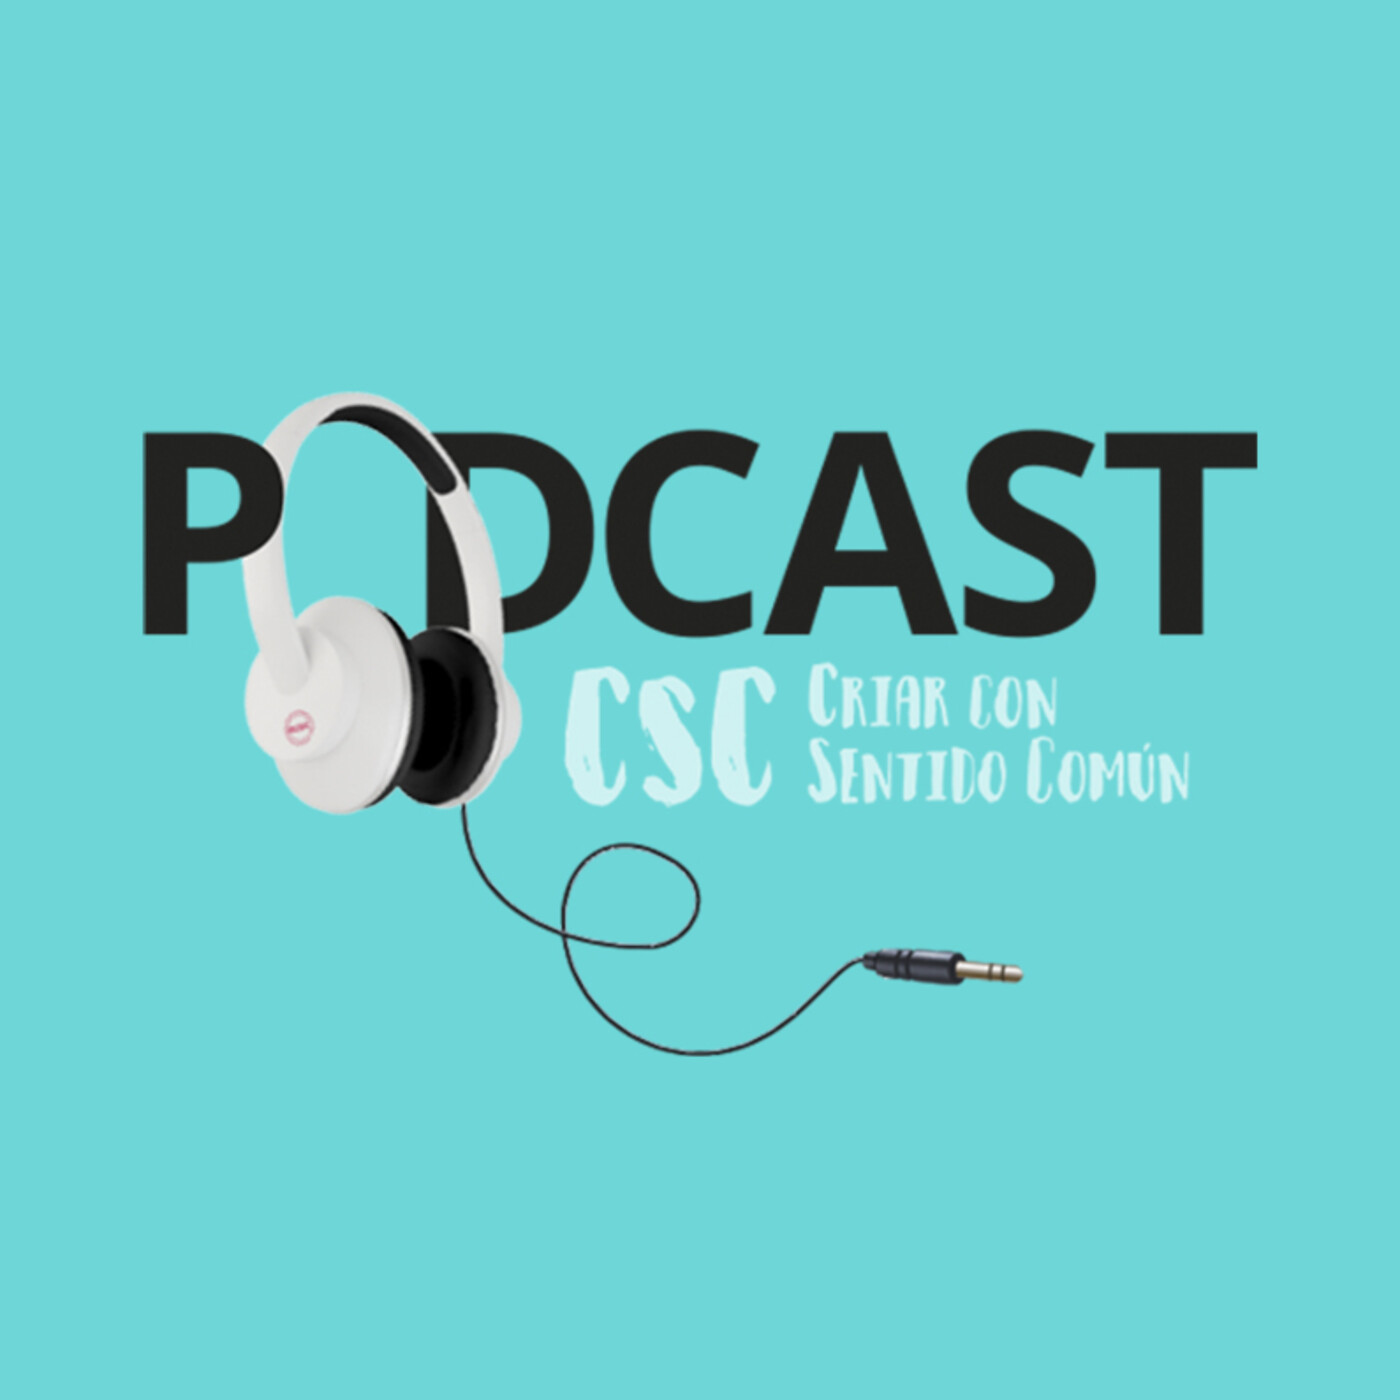 15. El primer verano del bebé - Podcast CSC - 01 de julio de 2021